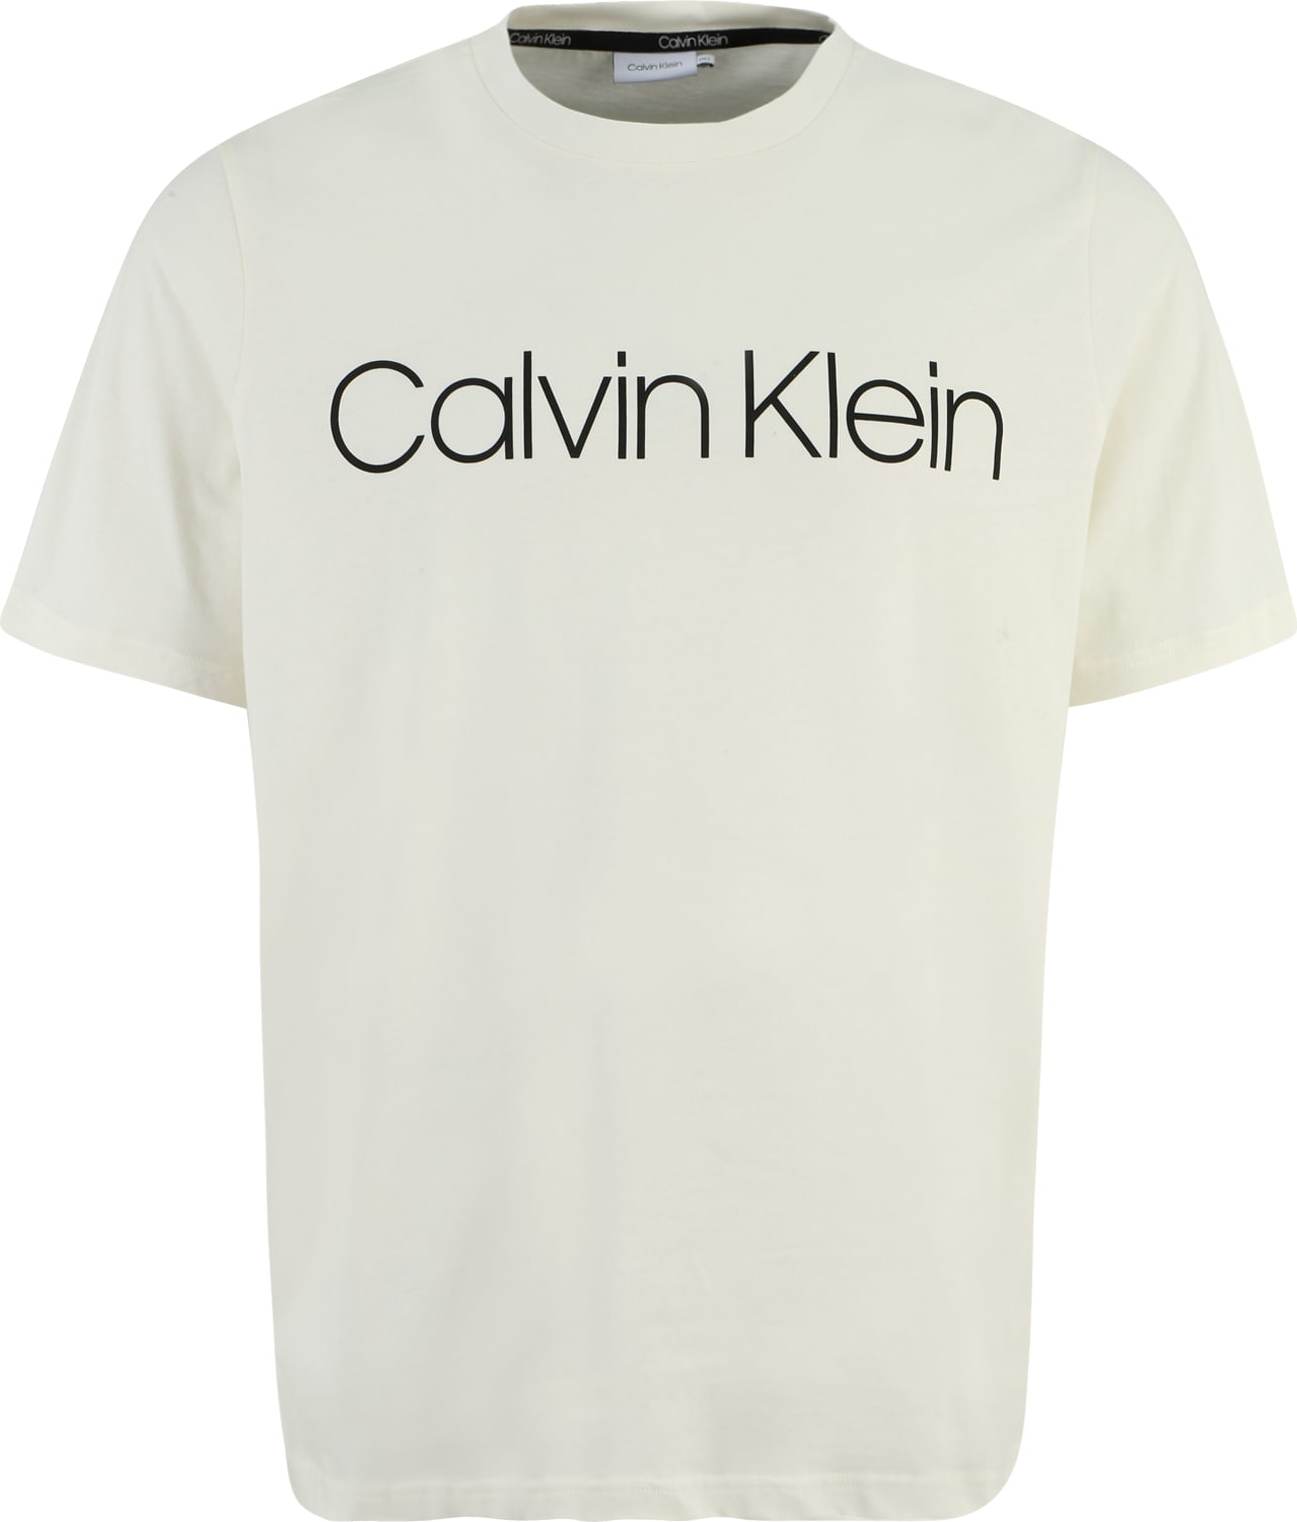 Tričko Calvin Klein Big & Tall béžová / černá